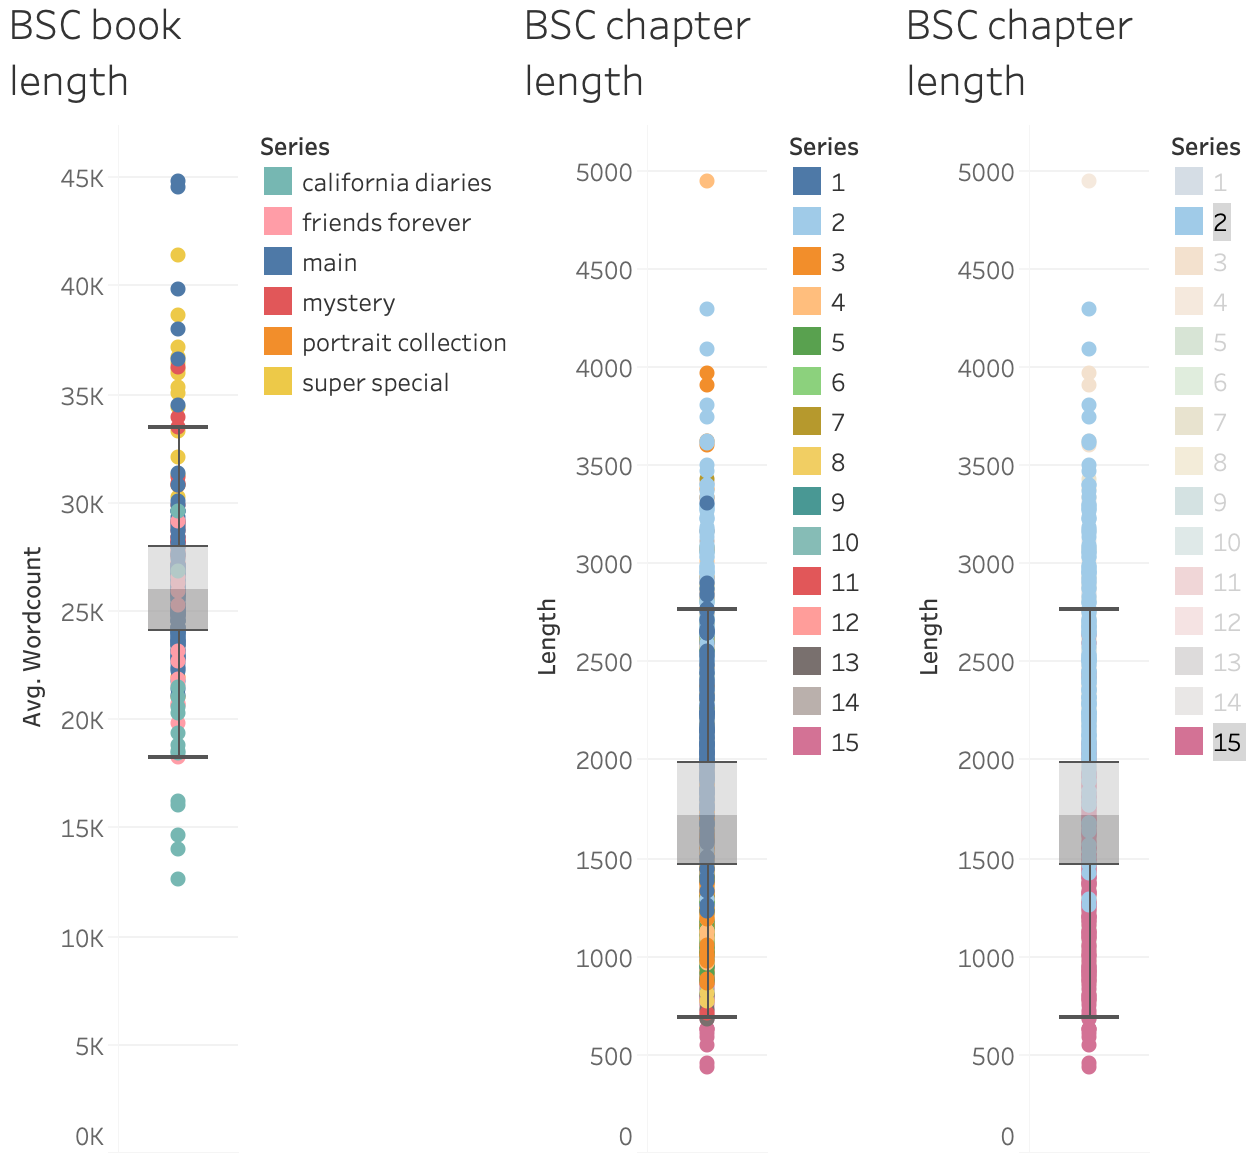 Gantt chart of book and chapter lengths